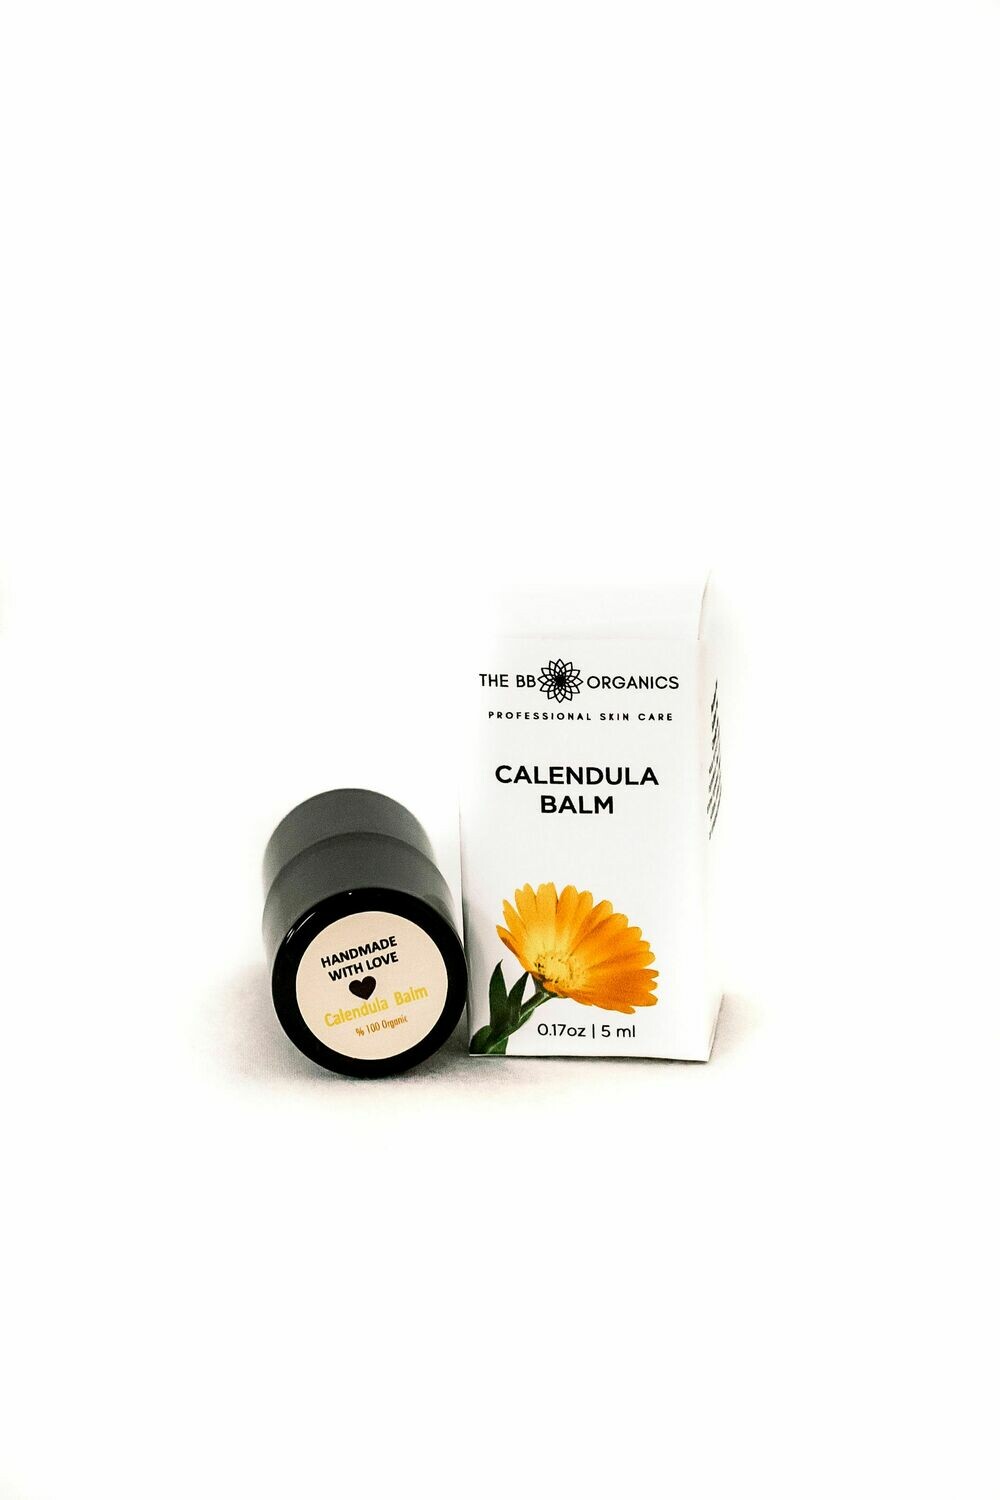 CALENDULA BALM TUBE - 
Our miracle balm
for all skin type